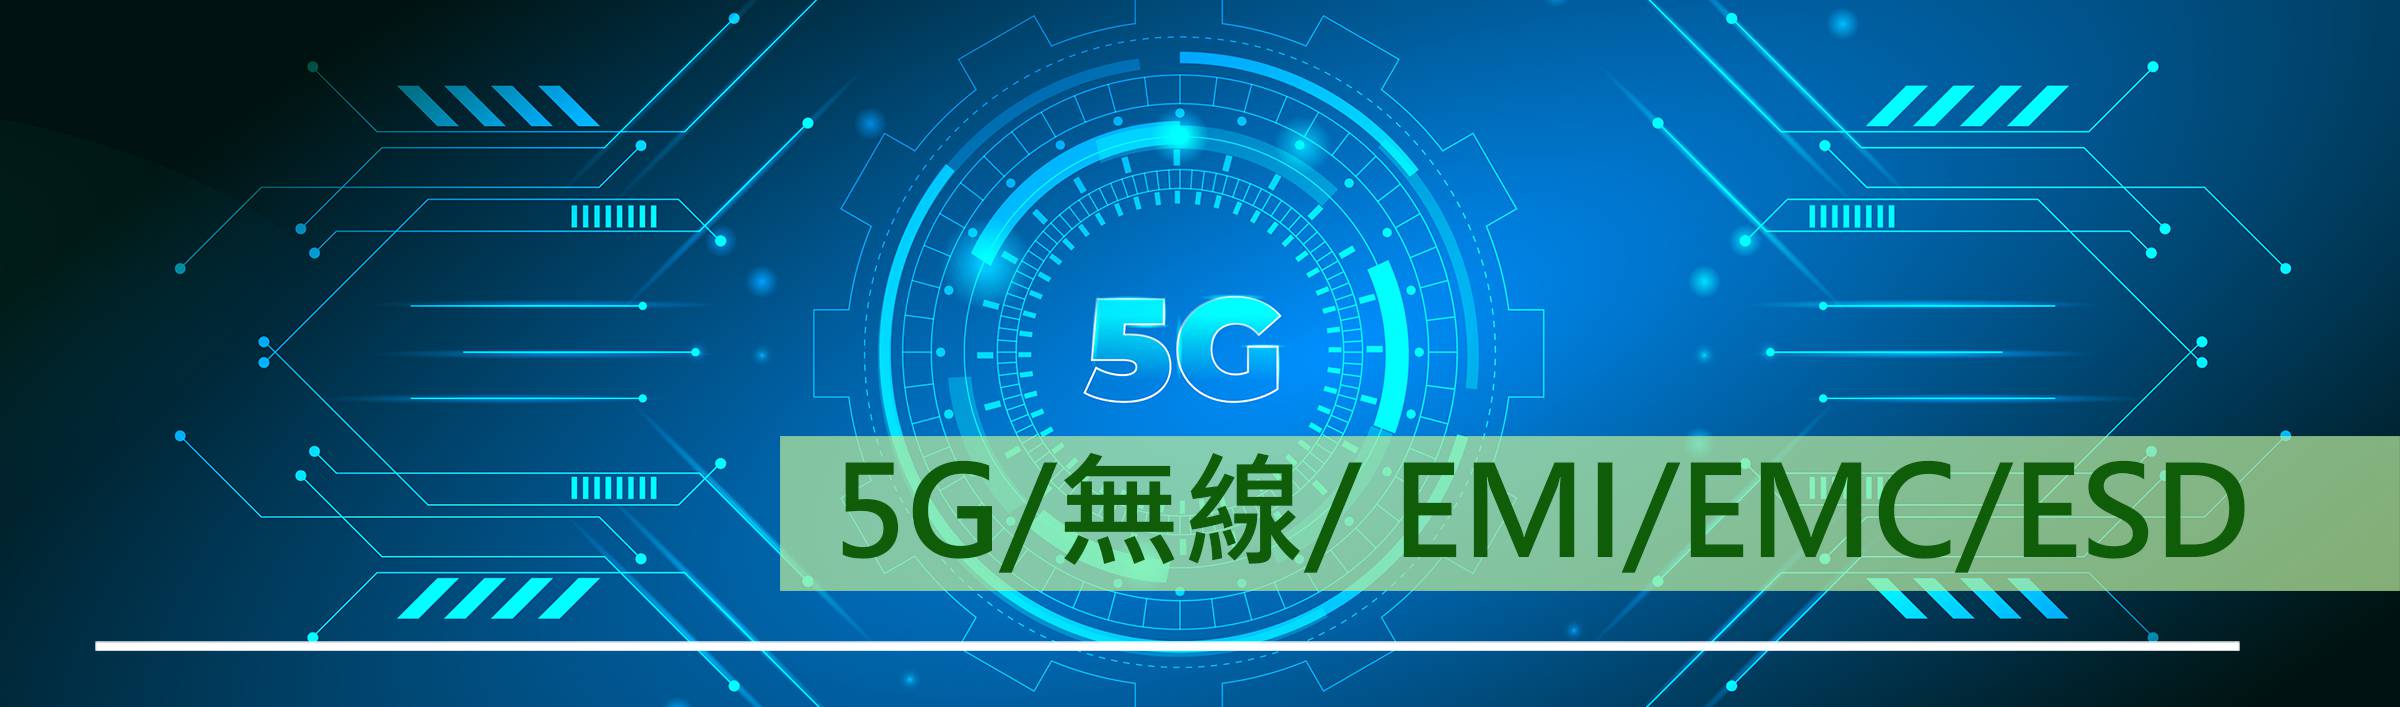 5G/無線/EMI/EMC/ESD